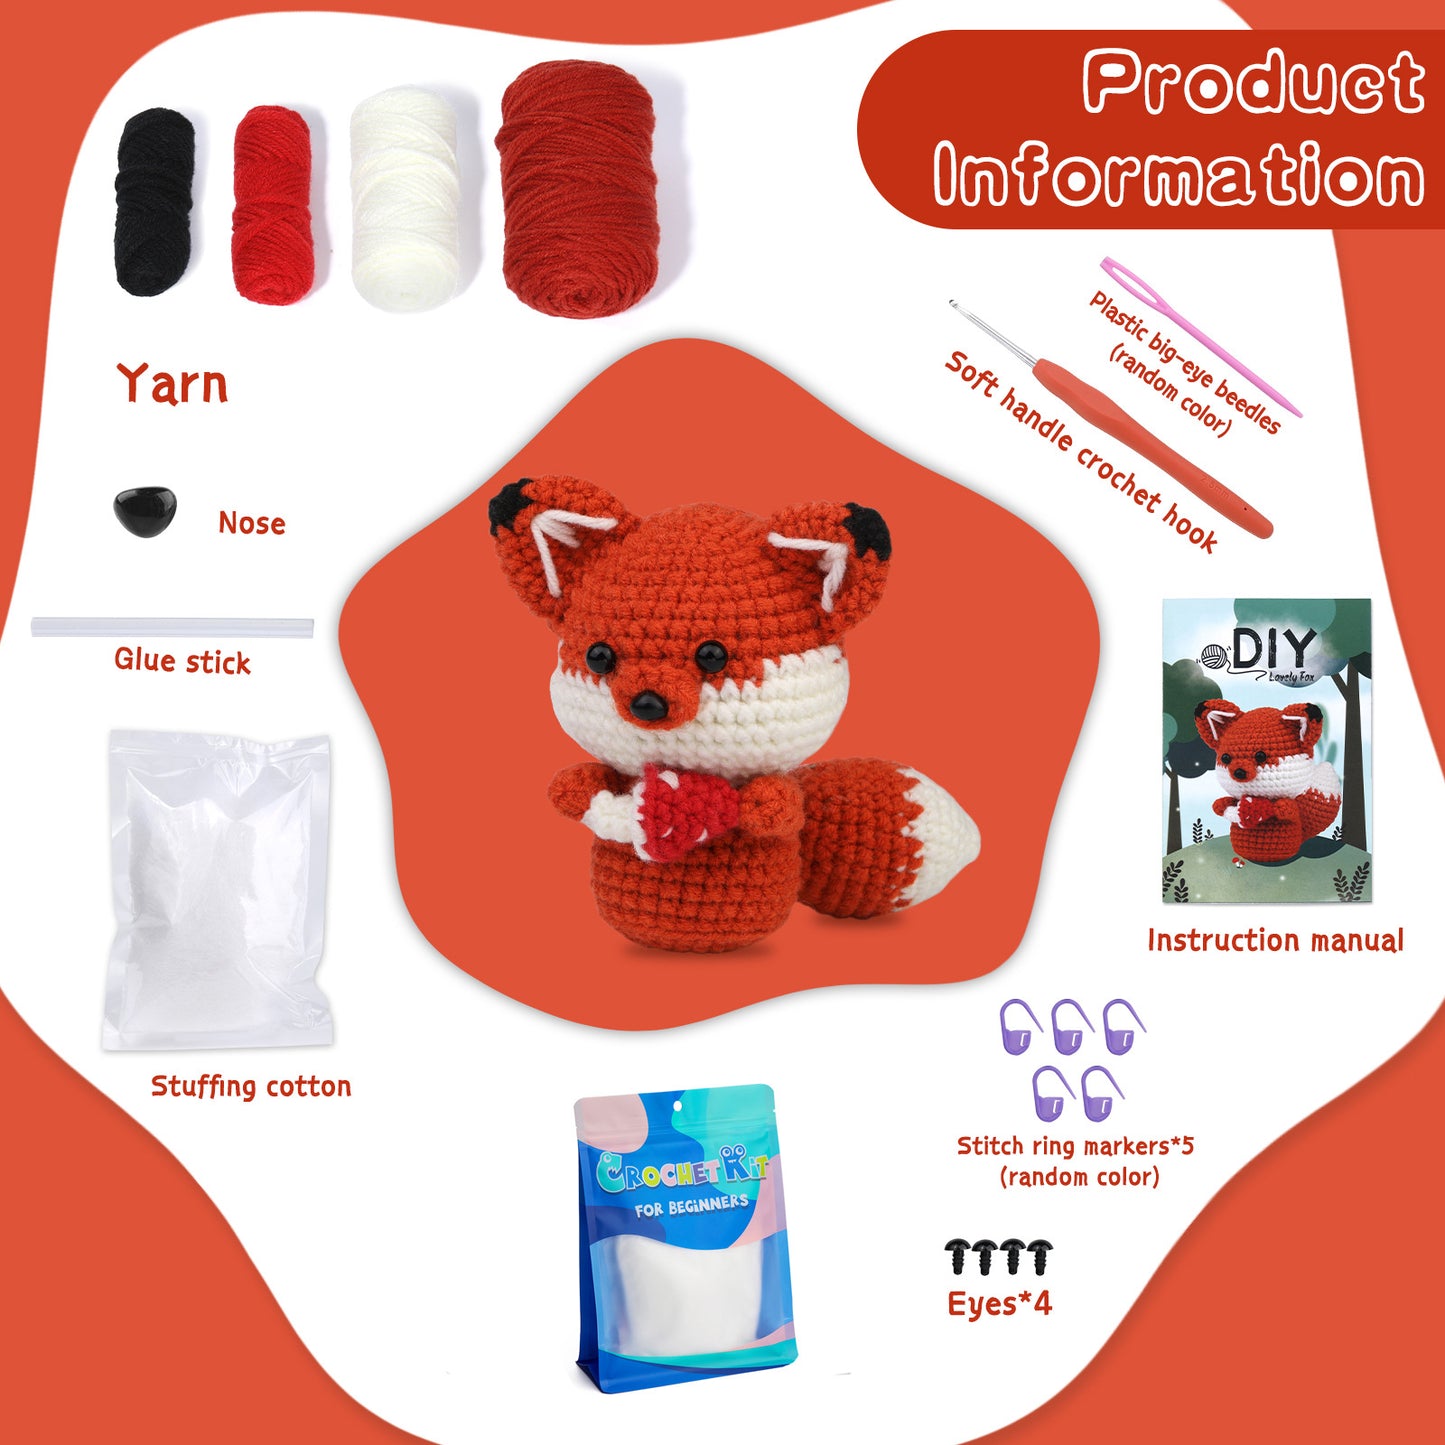 Fox Doll Handmade Knitting Material Kit